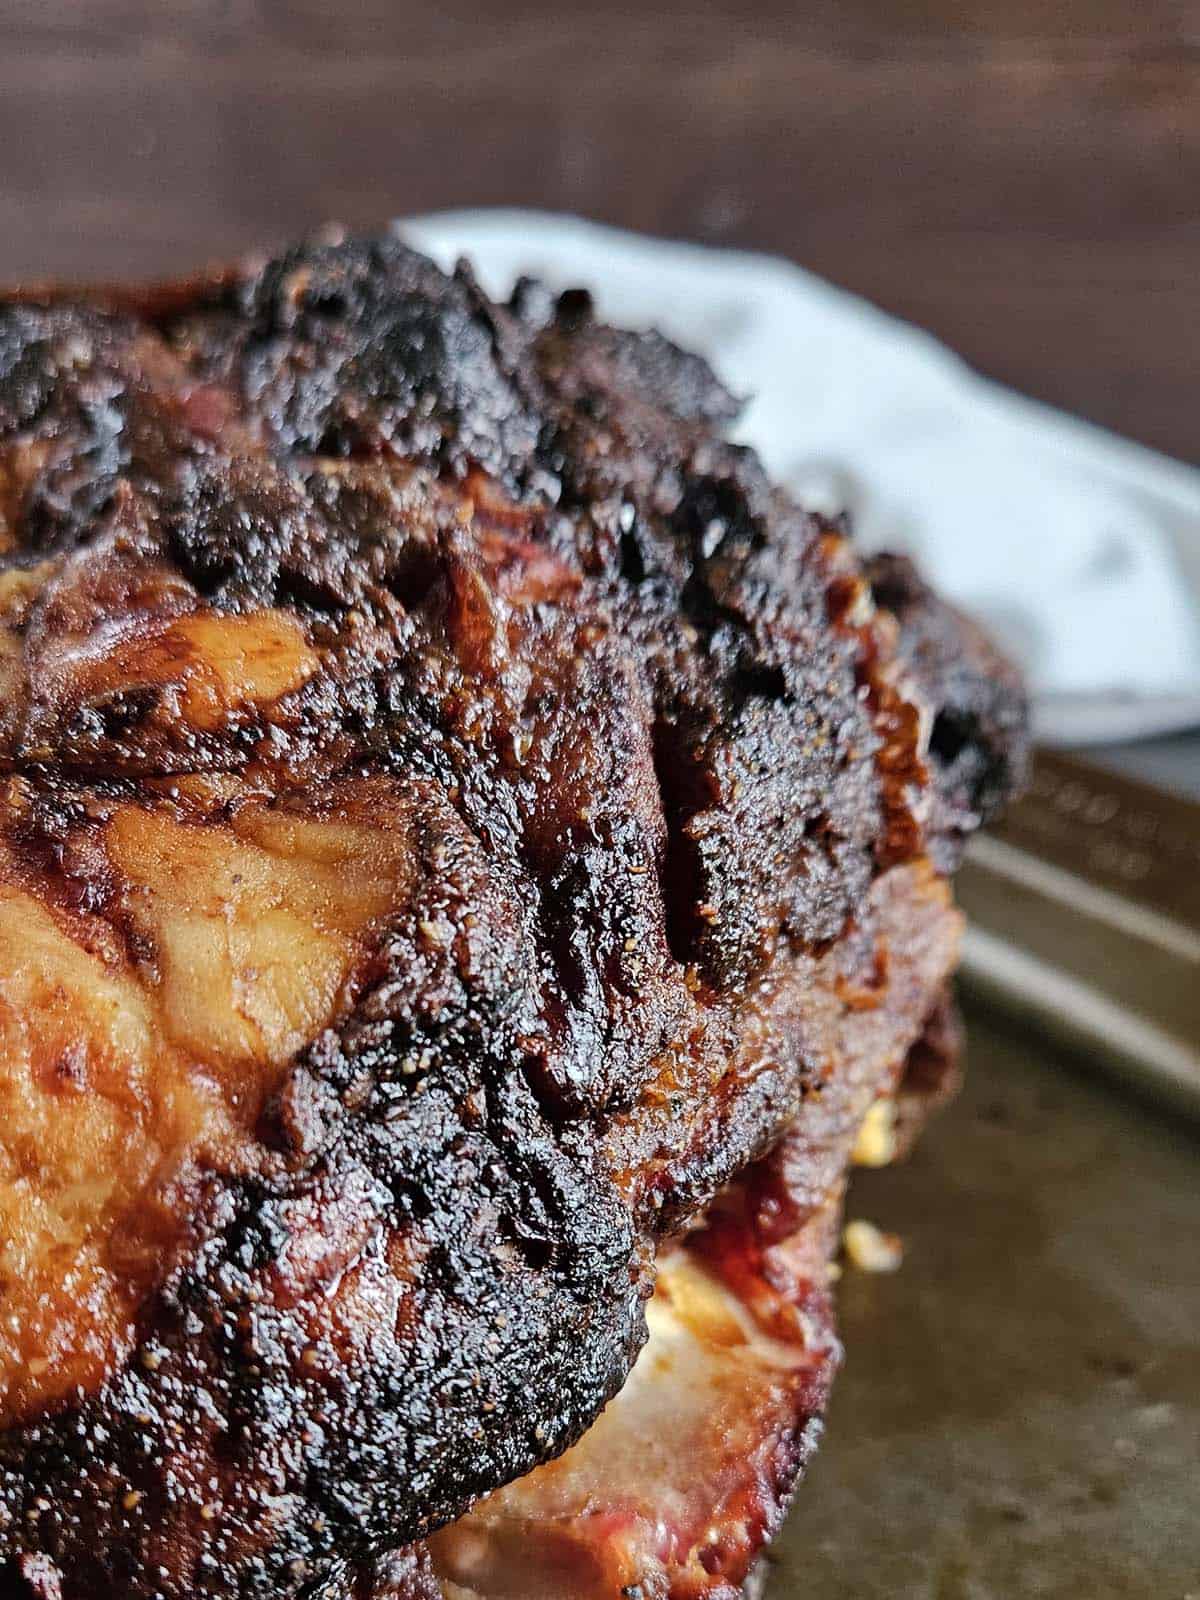 Close up of a smoked pork roast.